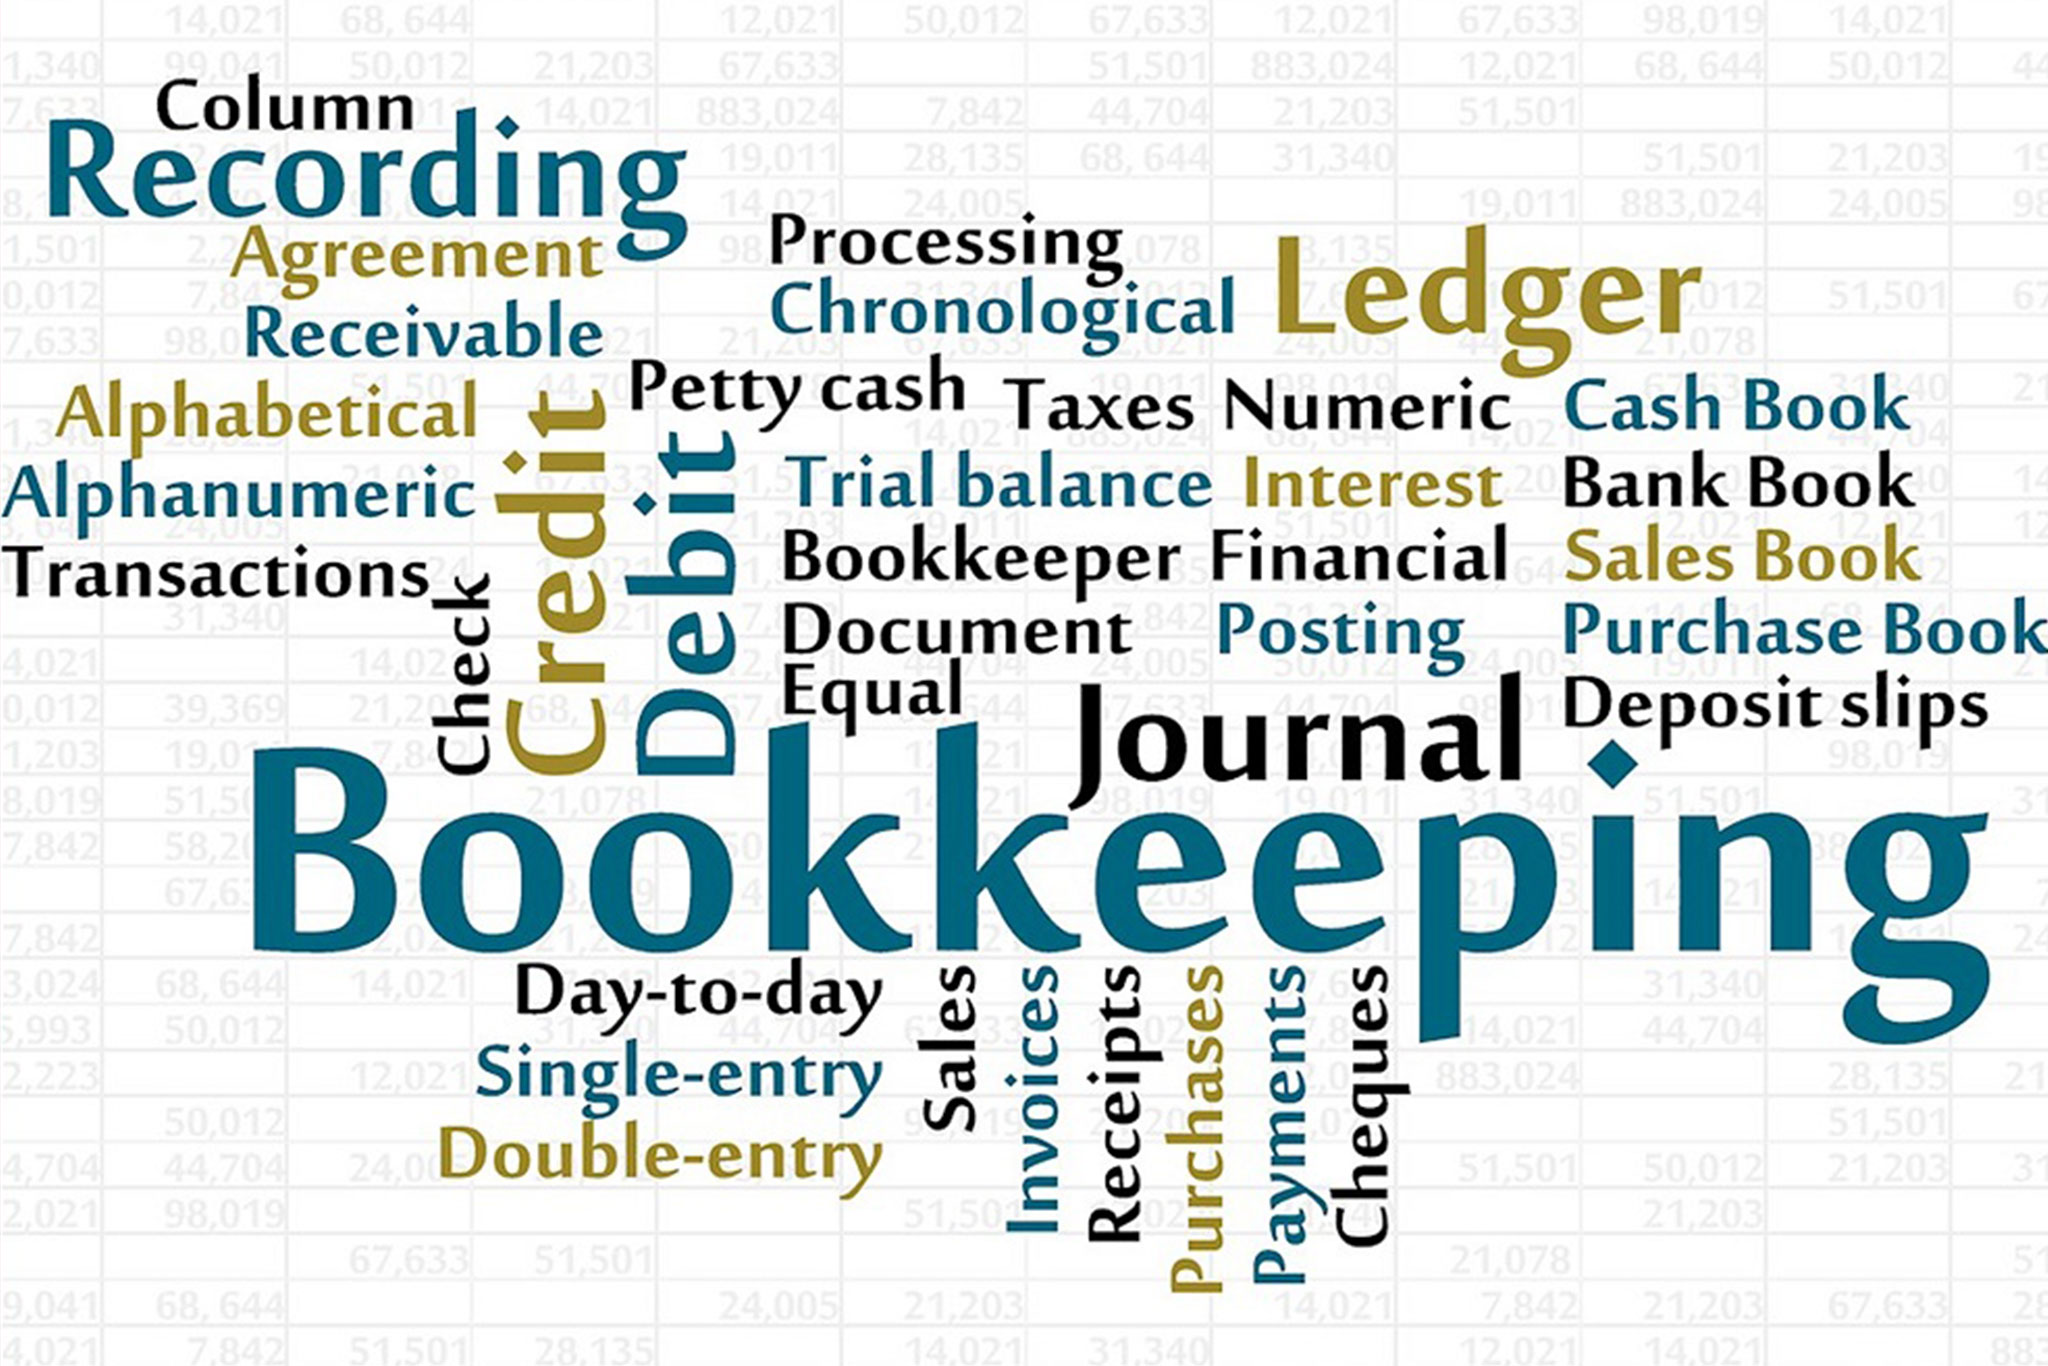 https://mclici.ca/wp-content/uploads/2022/05/bookkeeping_image.jpg